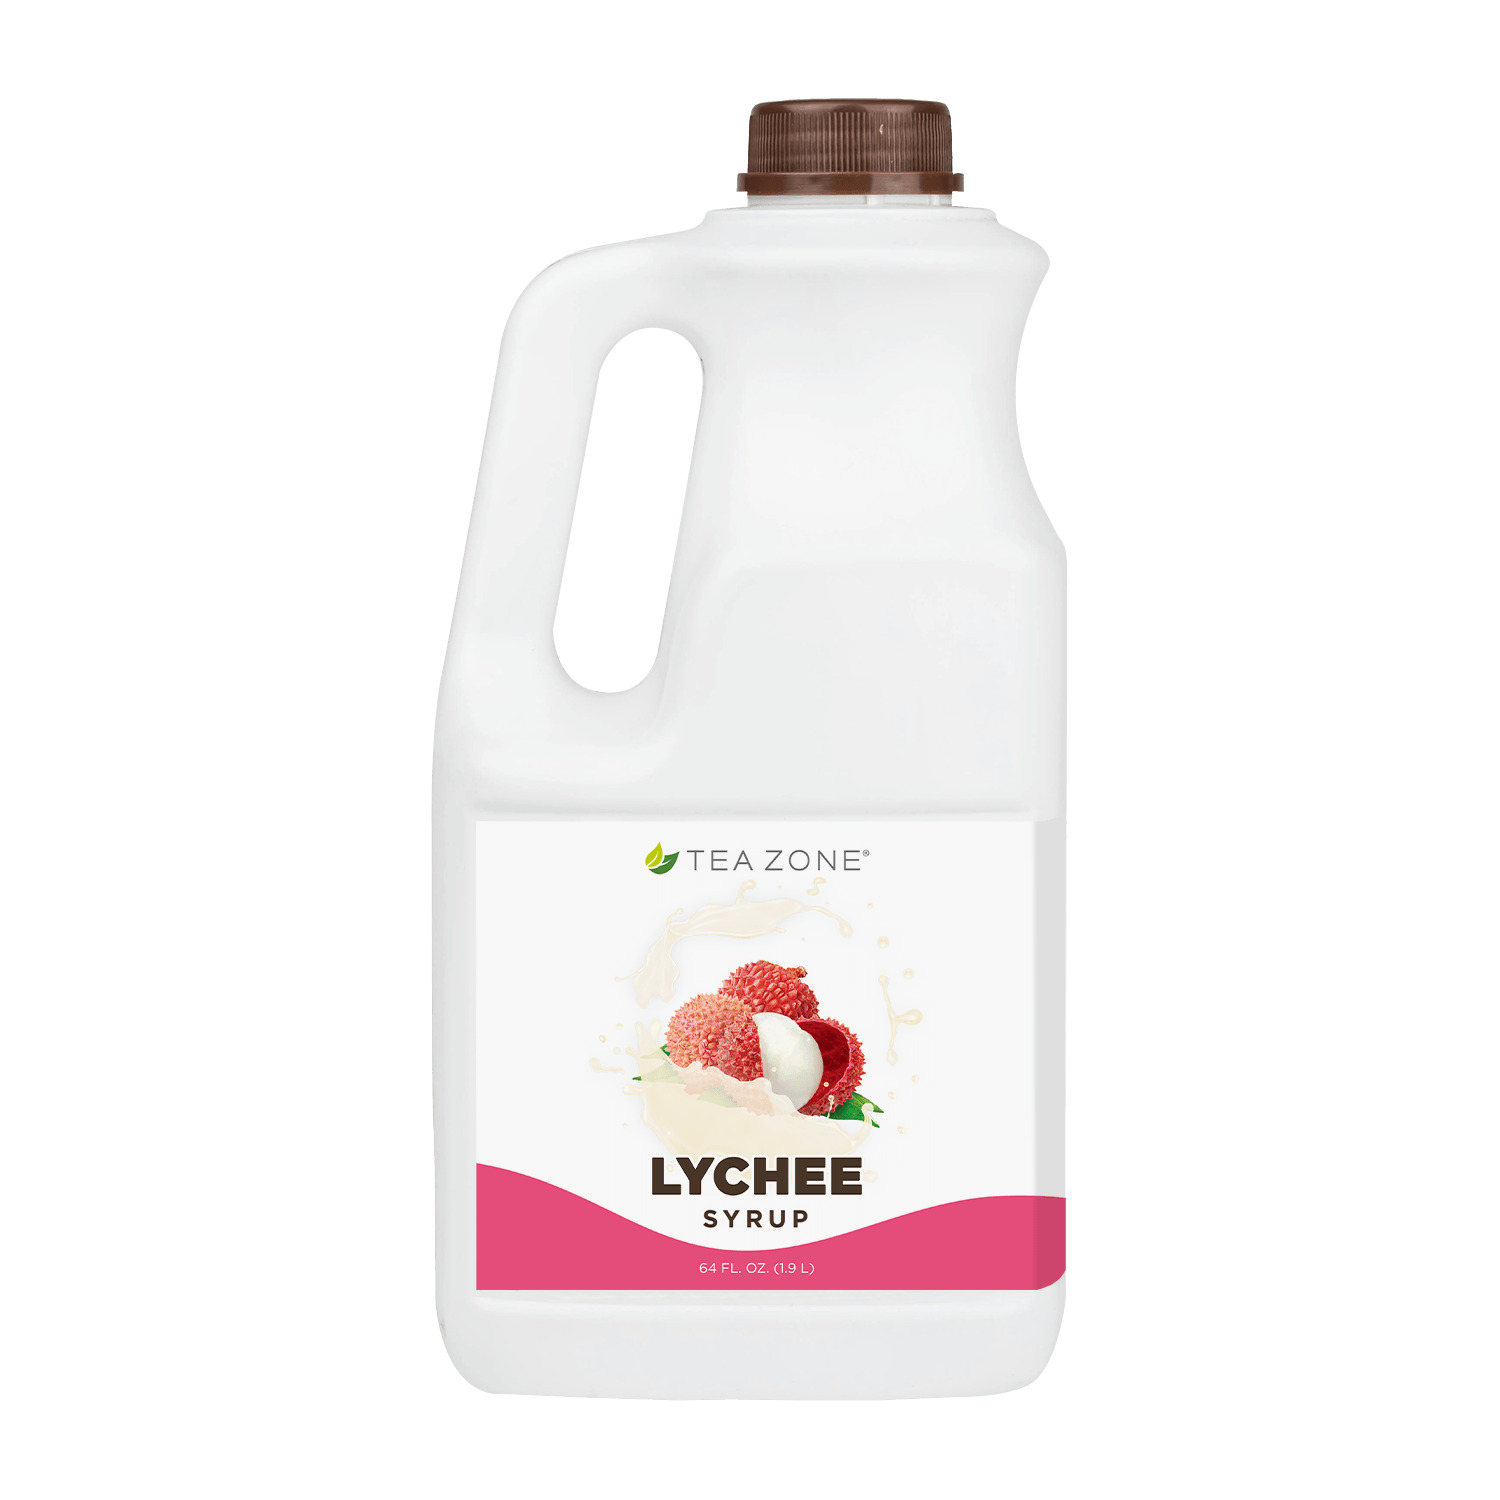 Tea Zone Lychee Syrup (64oz), J1040